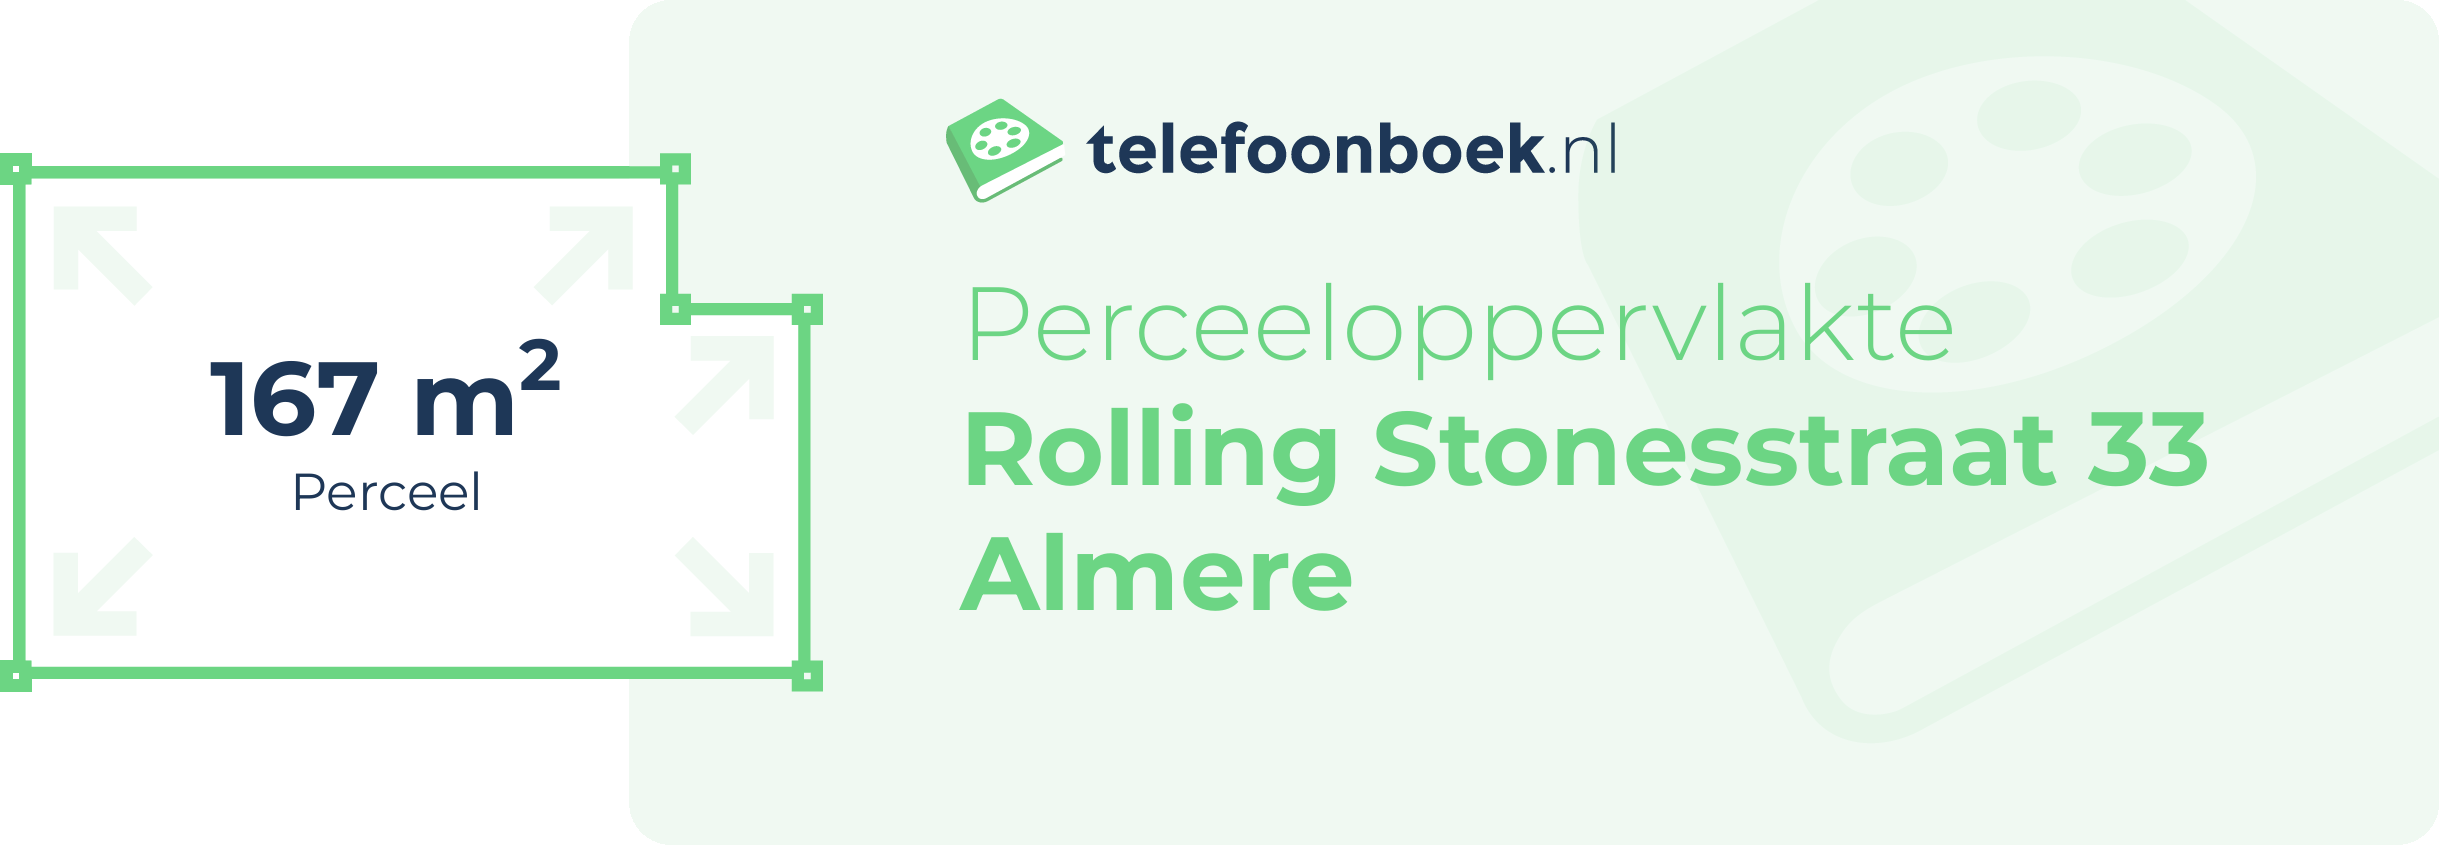 Perceeloppervlakte Rolling Stonesstraat 33 Almere